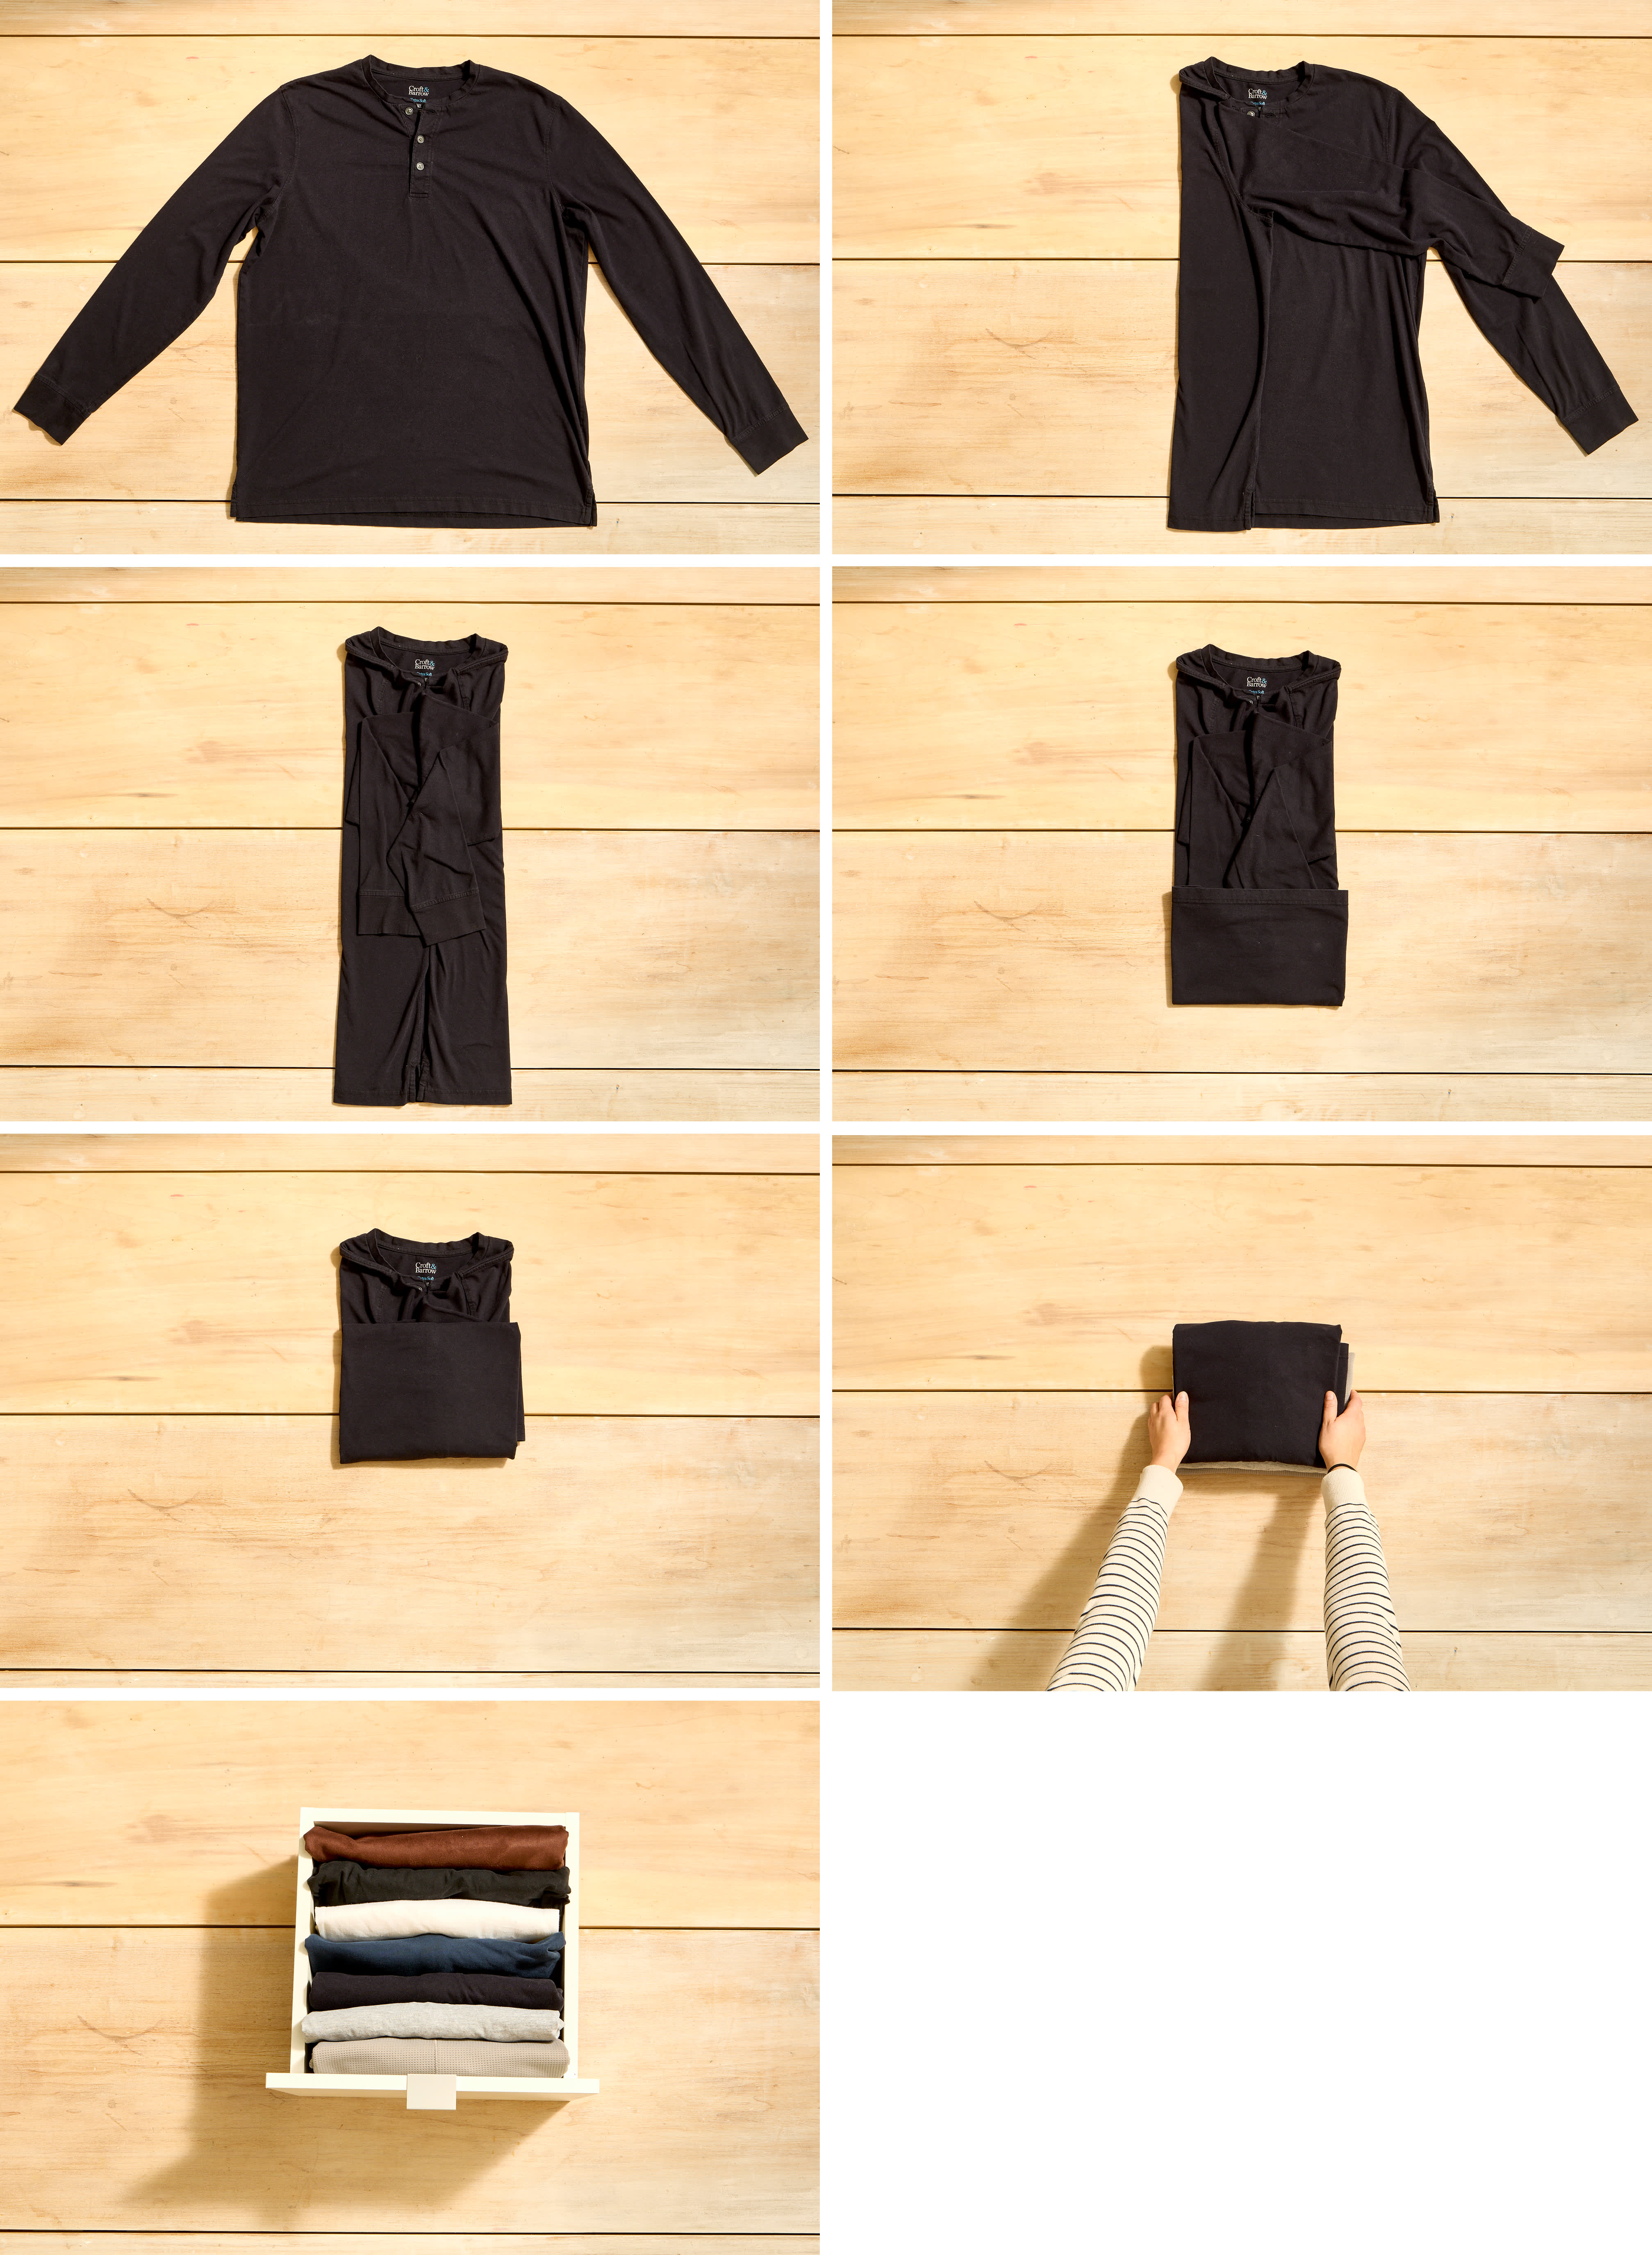 4 Ways to Fold a Long-Sleeve Shirt